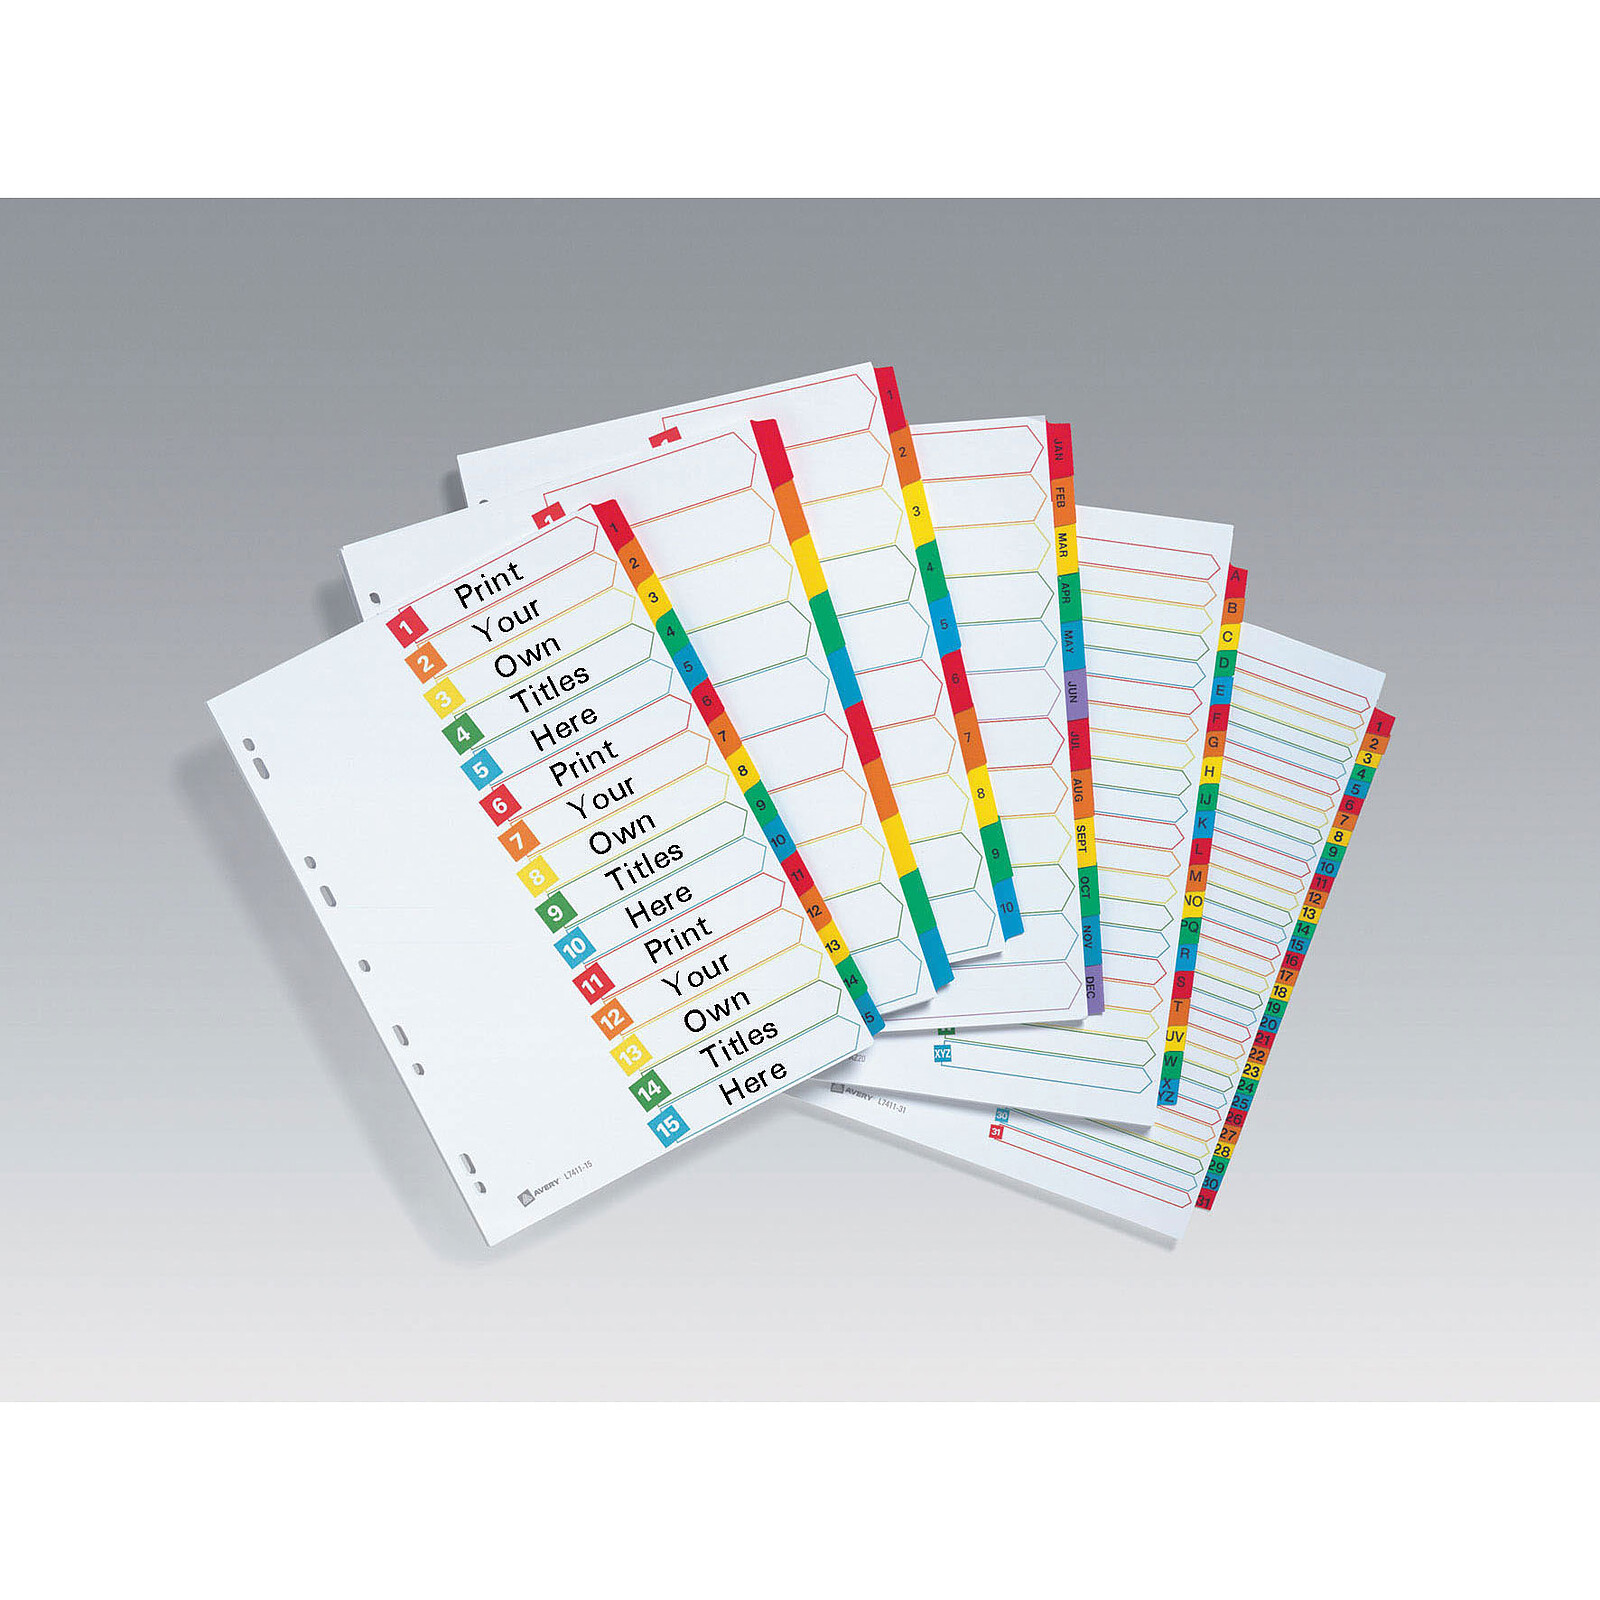 12 intercalaires personnalisables Ready Index Avery format A4 touches  numériques carte 190 g - Intercalaires